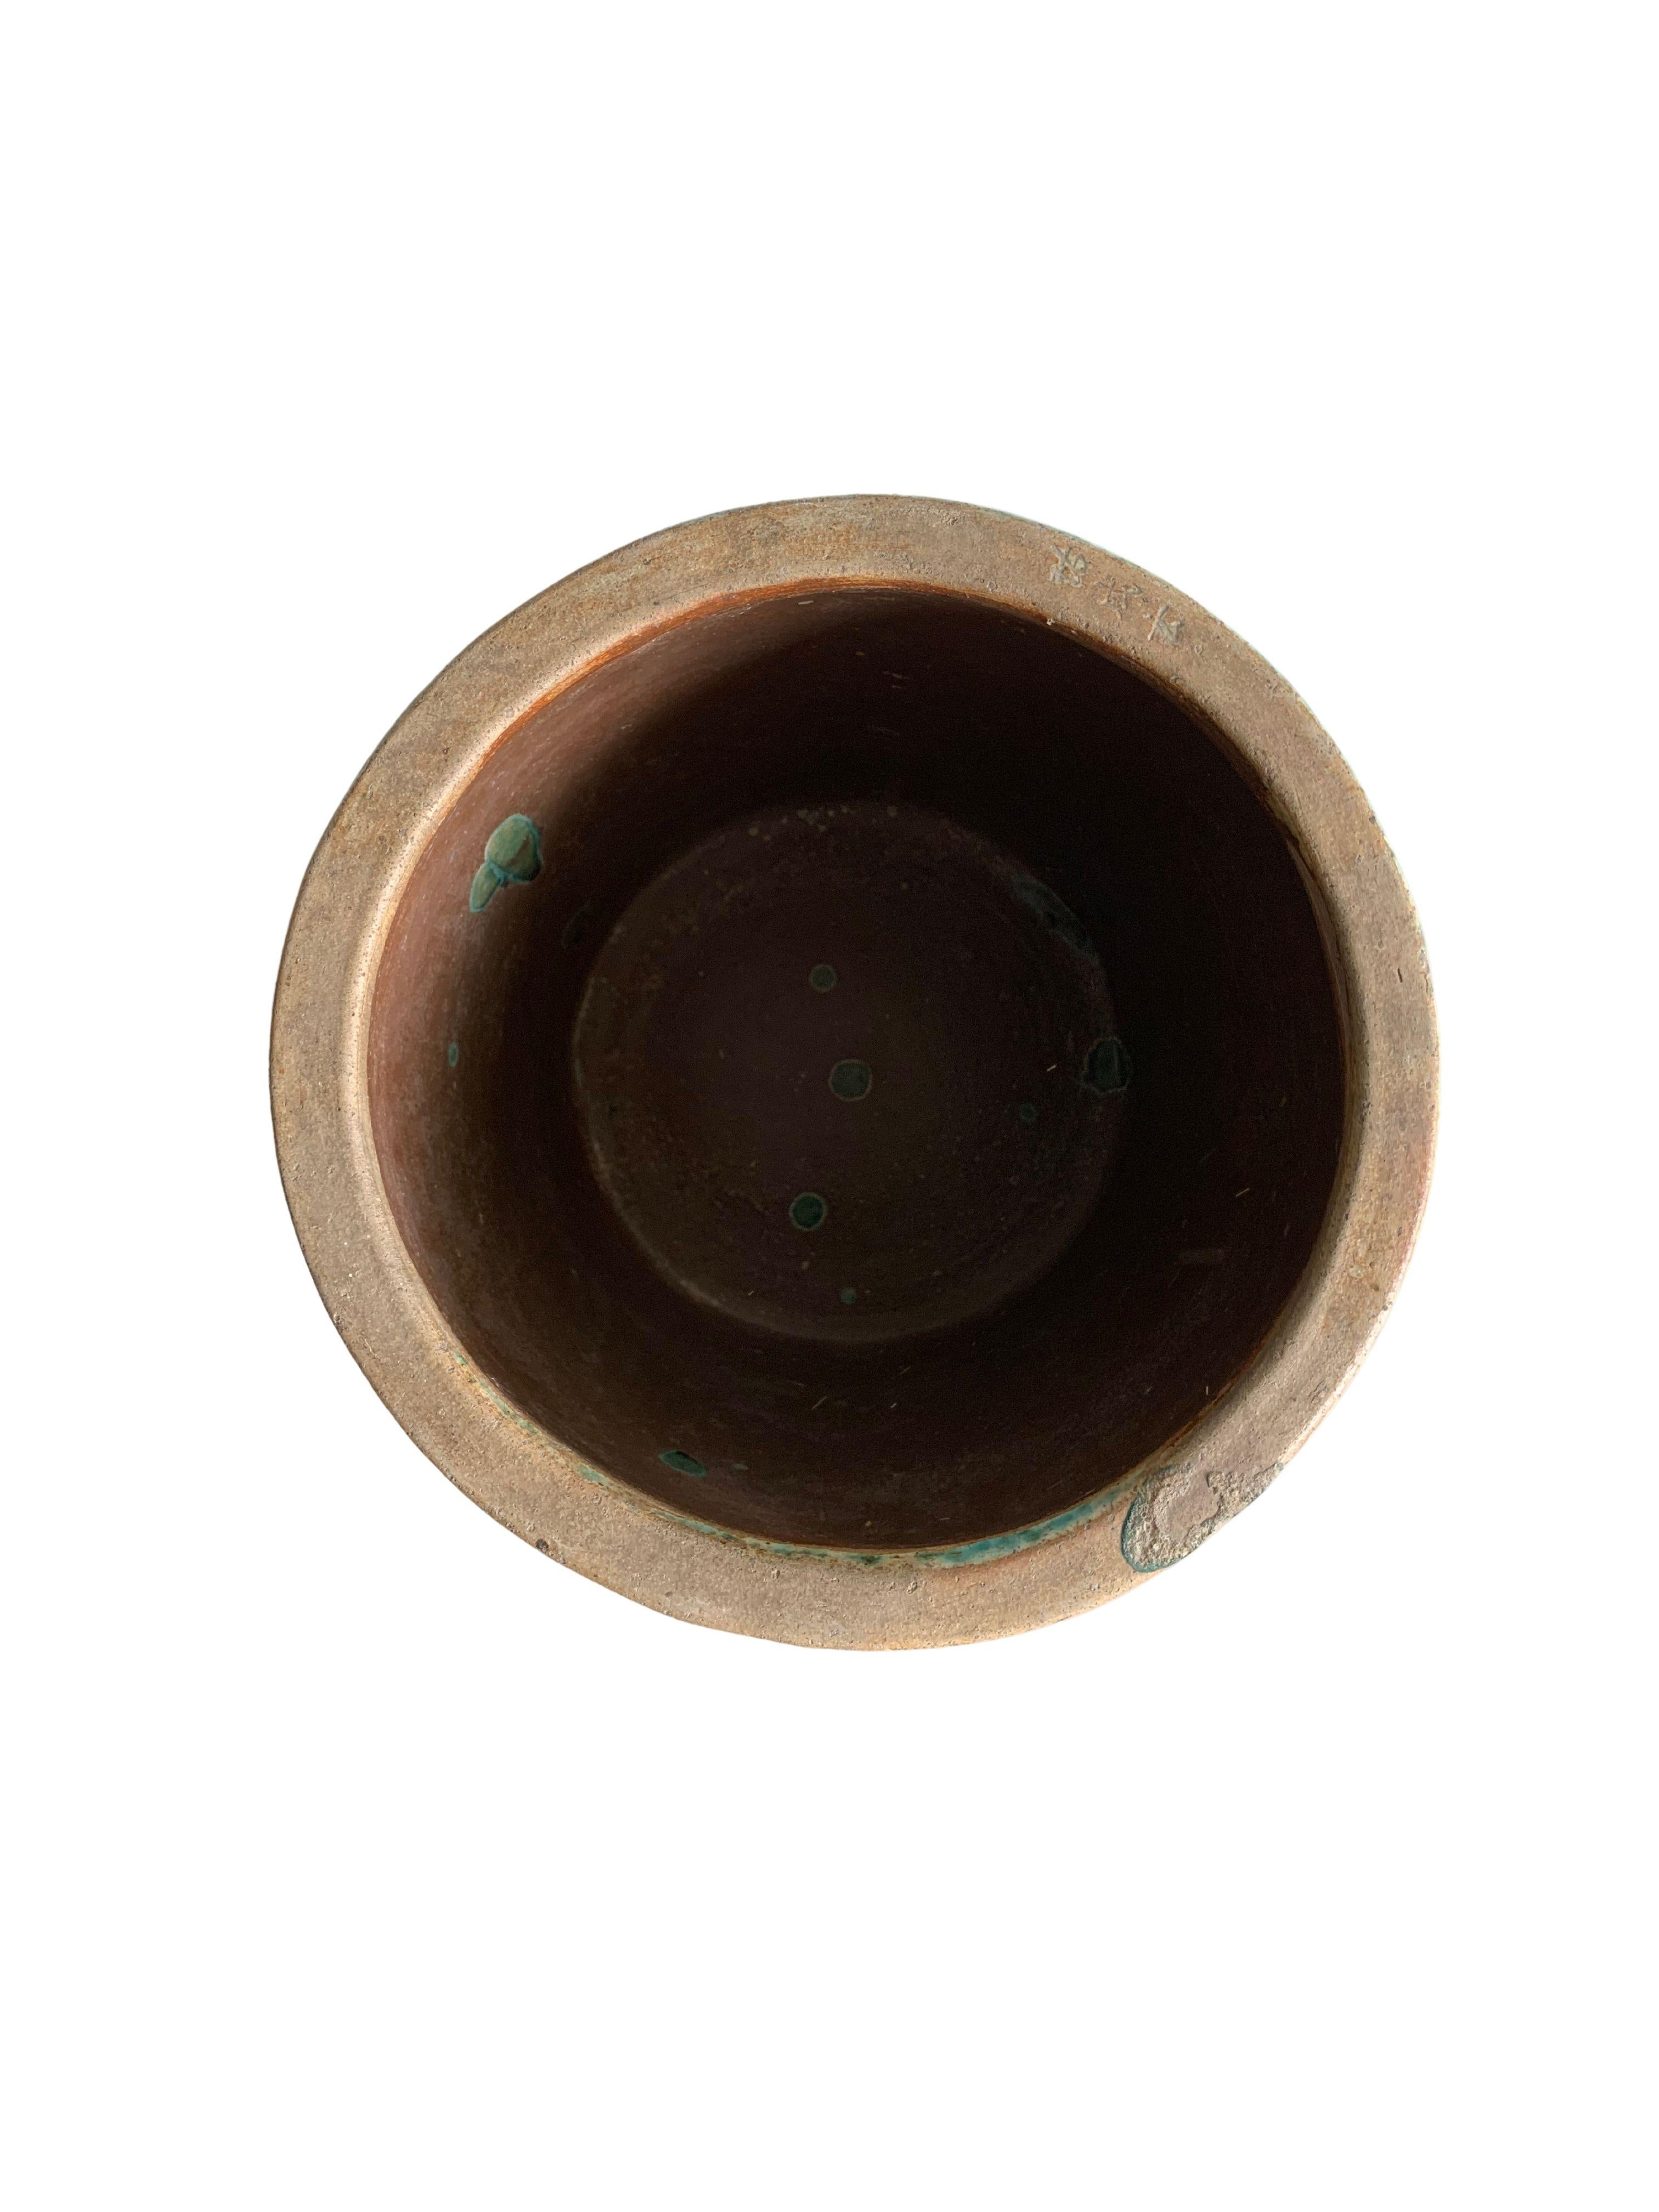 Chinese Green Glazed Ceramic Soy Sauce Storage Jar / Planter, c. 1900 For Sale 2